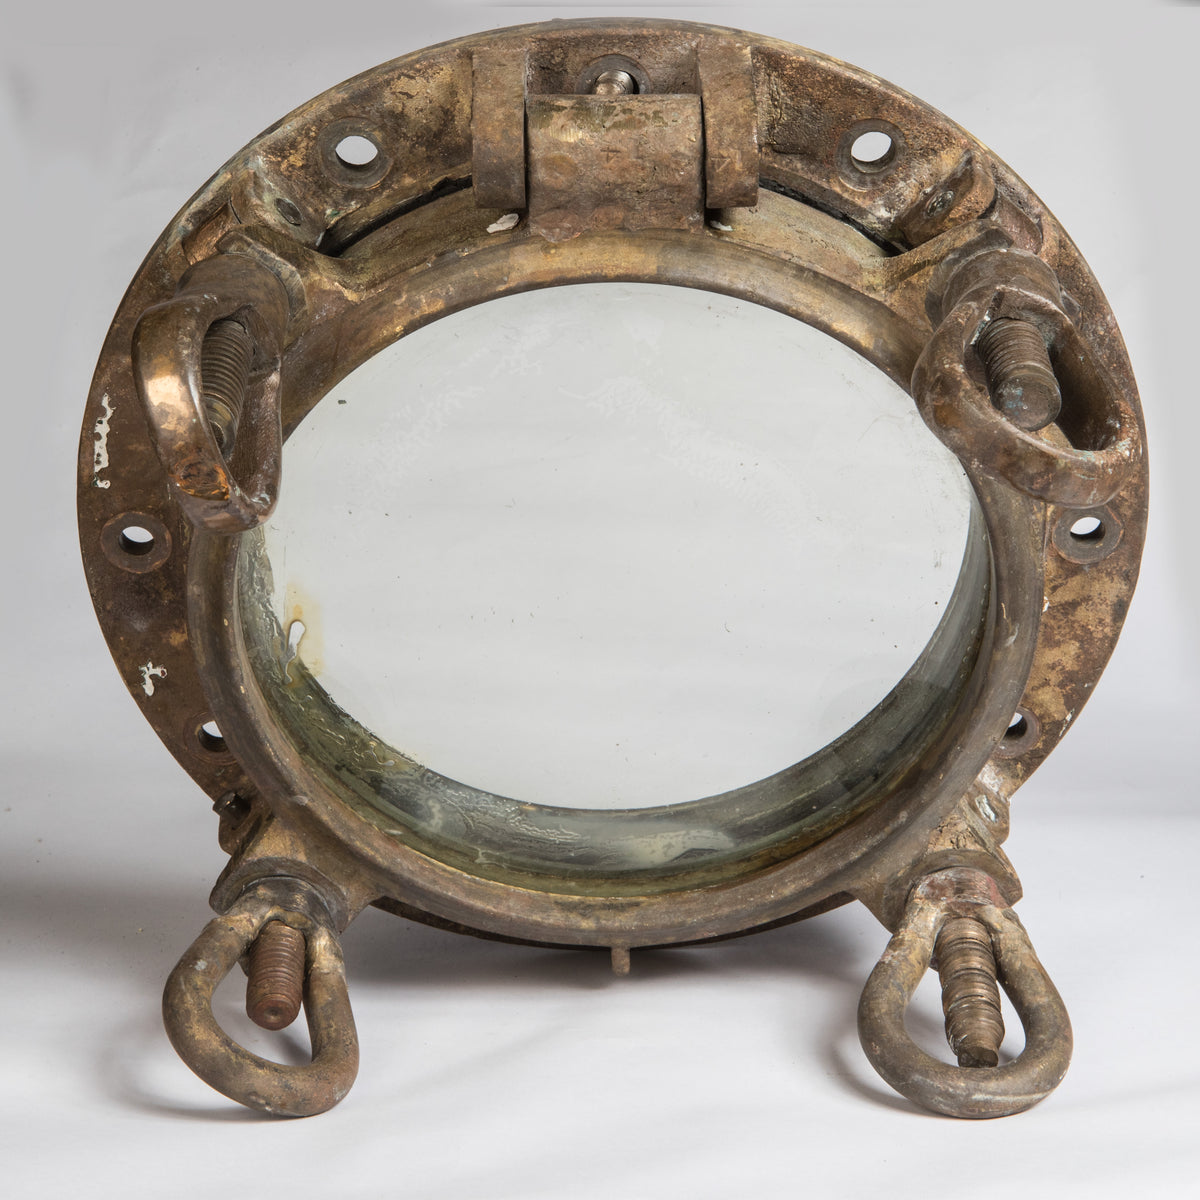 Antique Brass Naval Porthole | The Architectural Forum